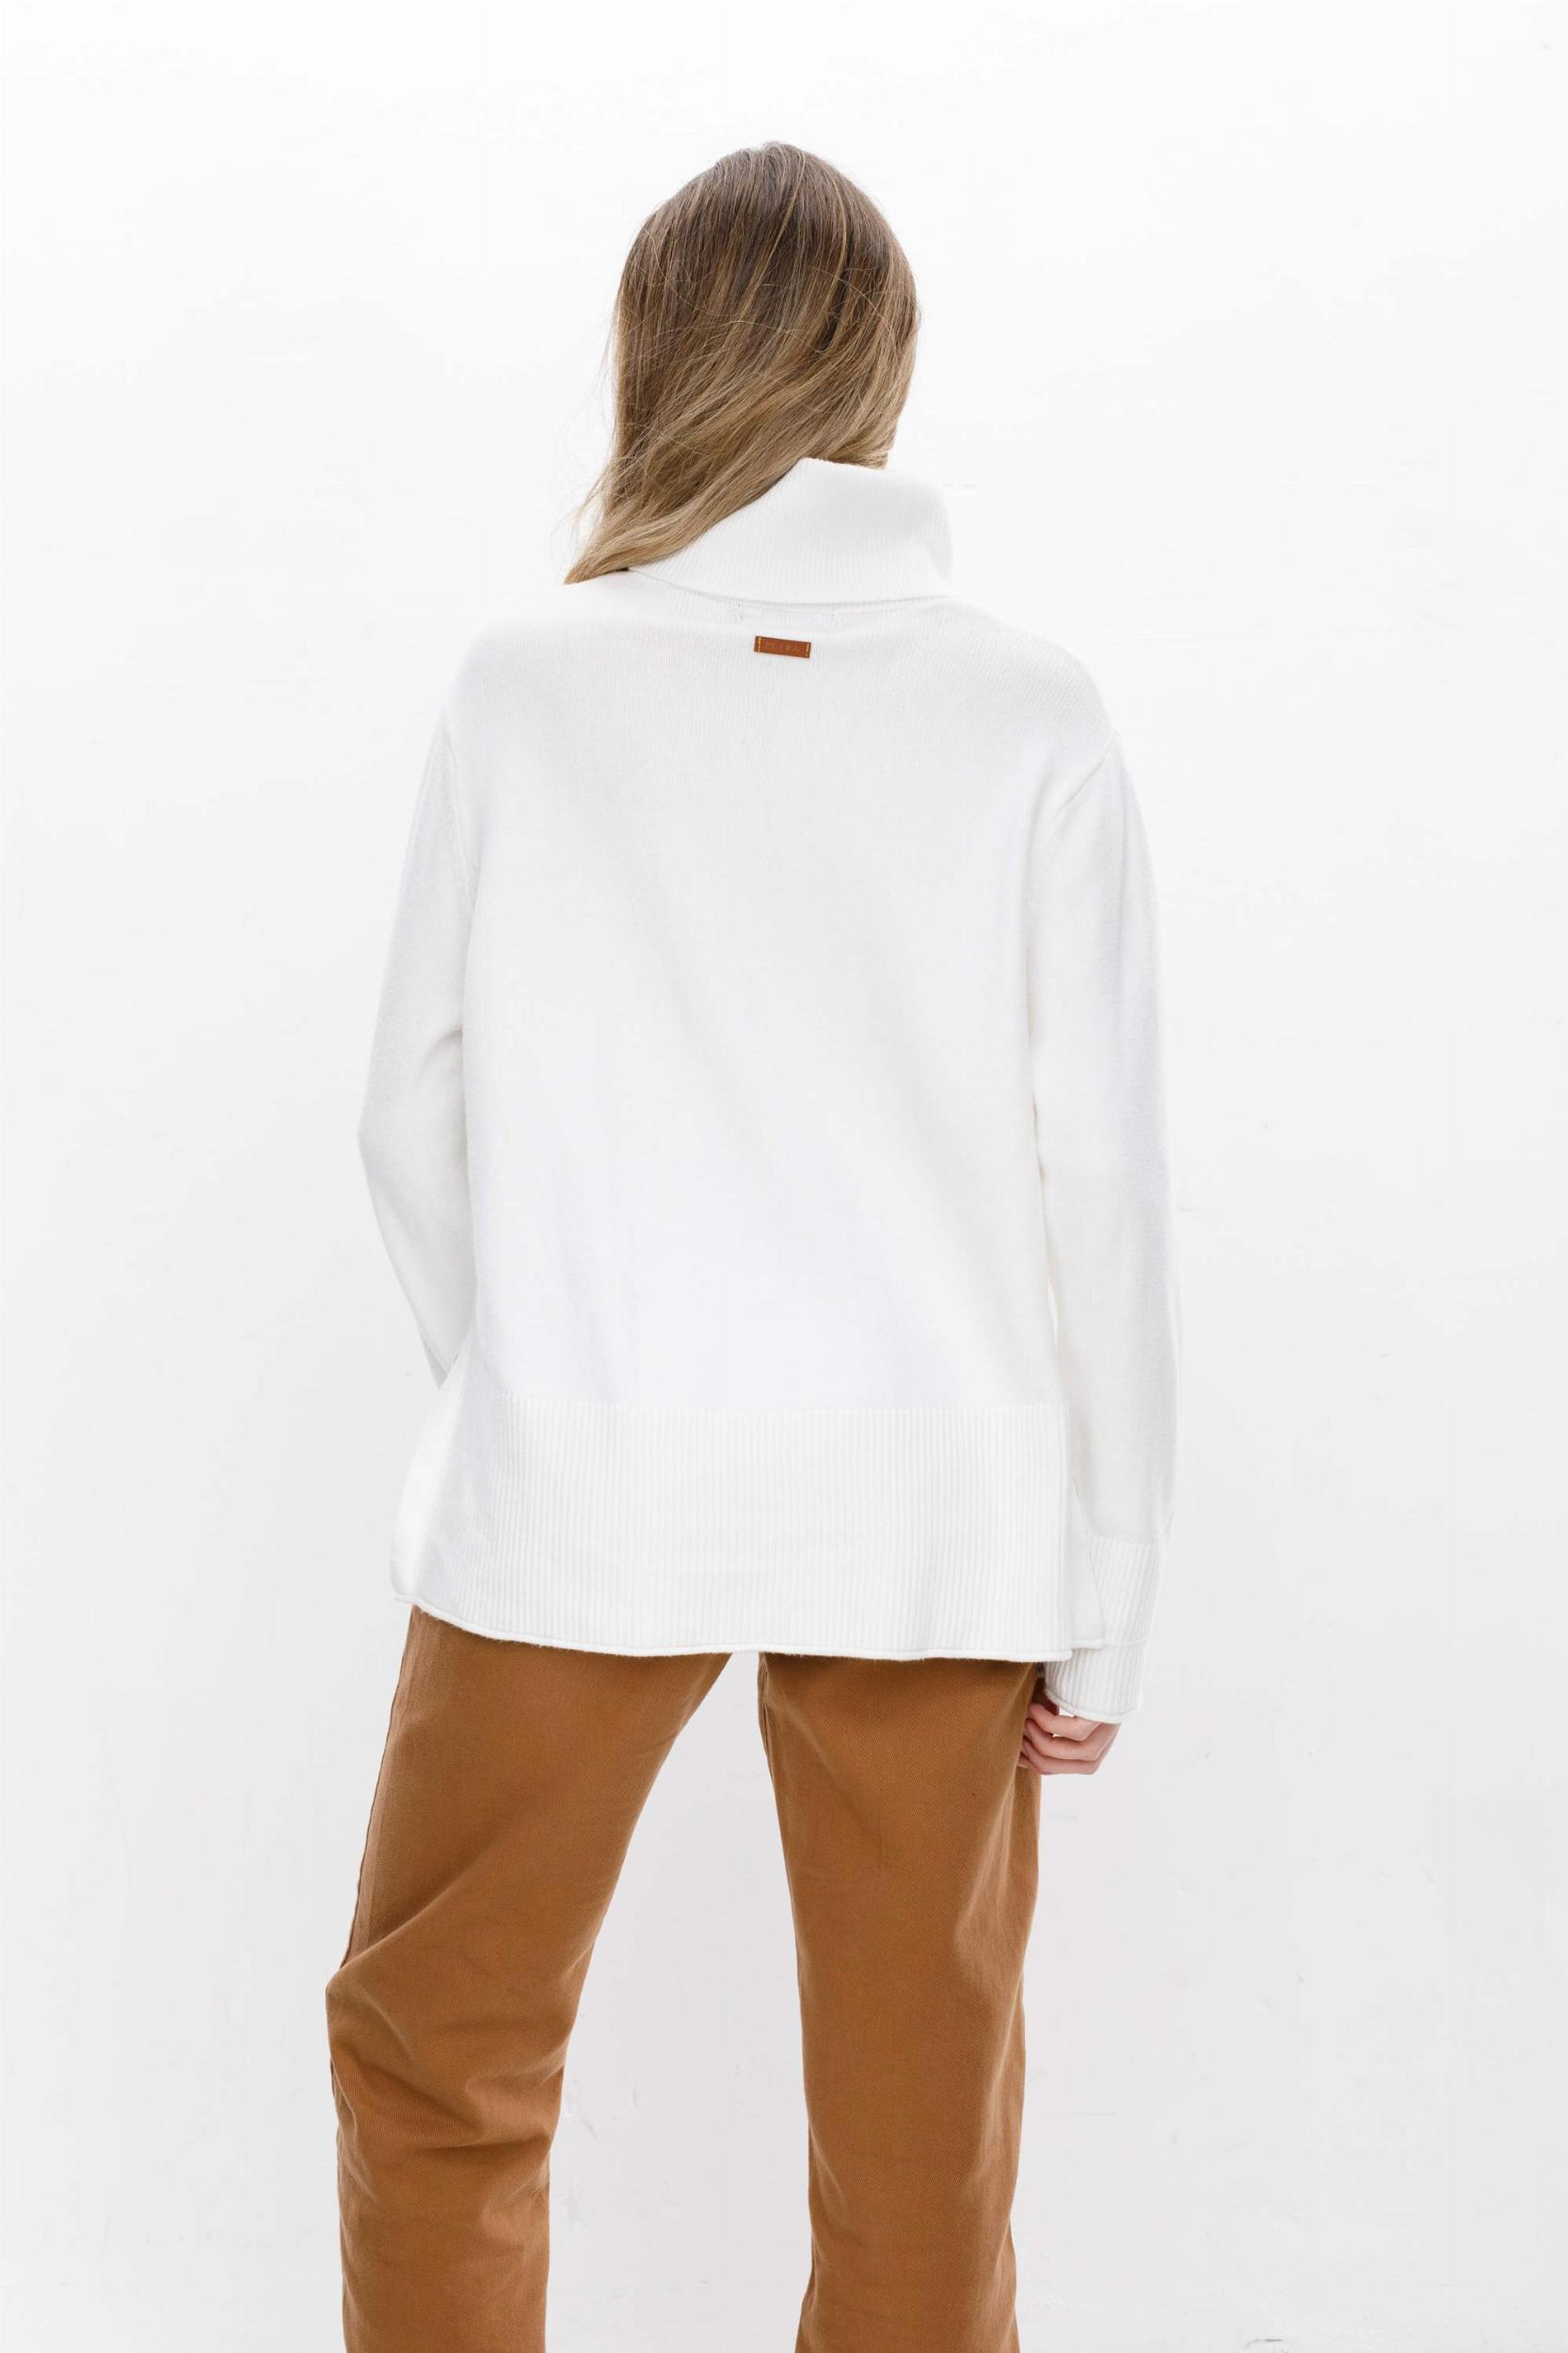 Sweater Polera Serrana blanco talle unico